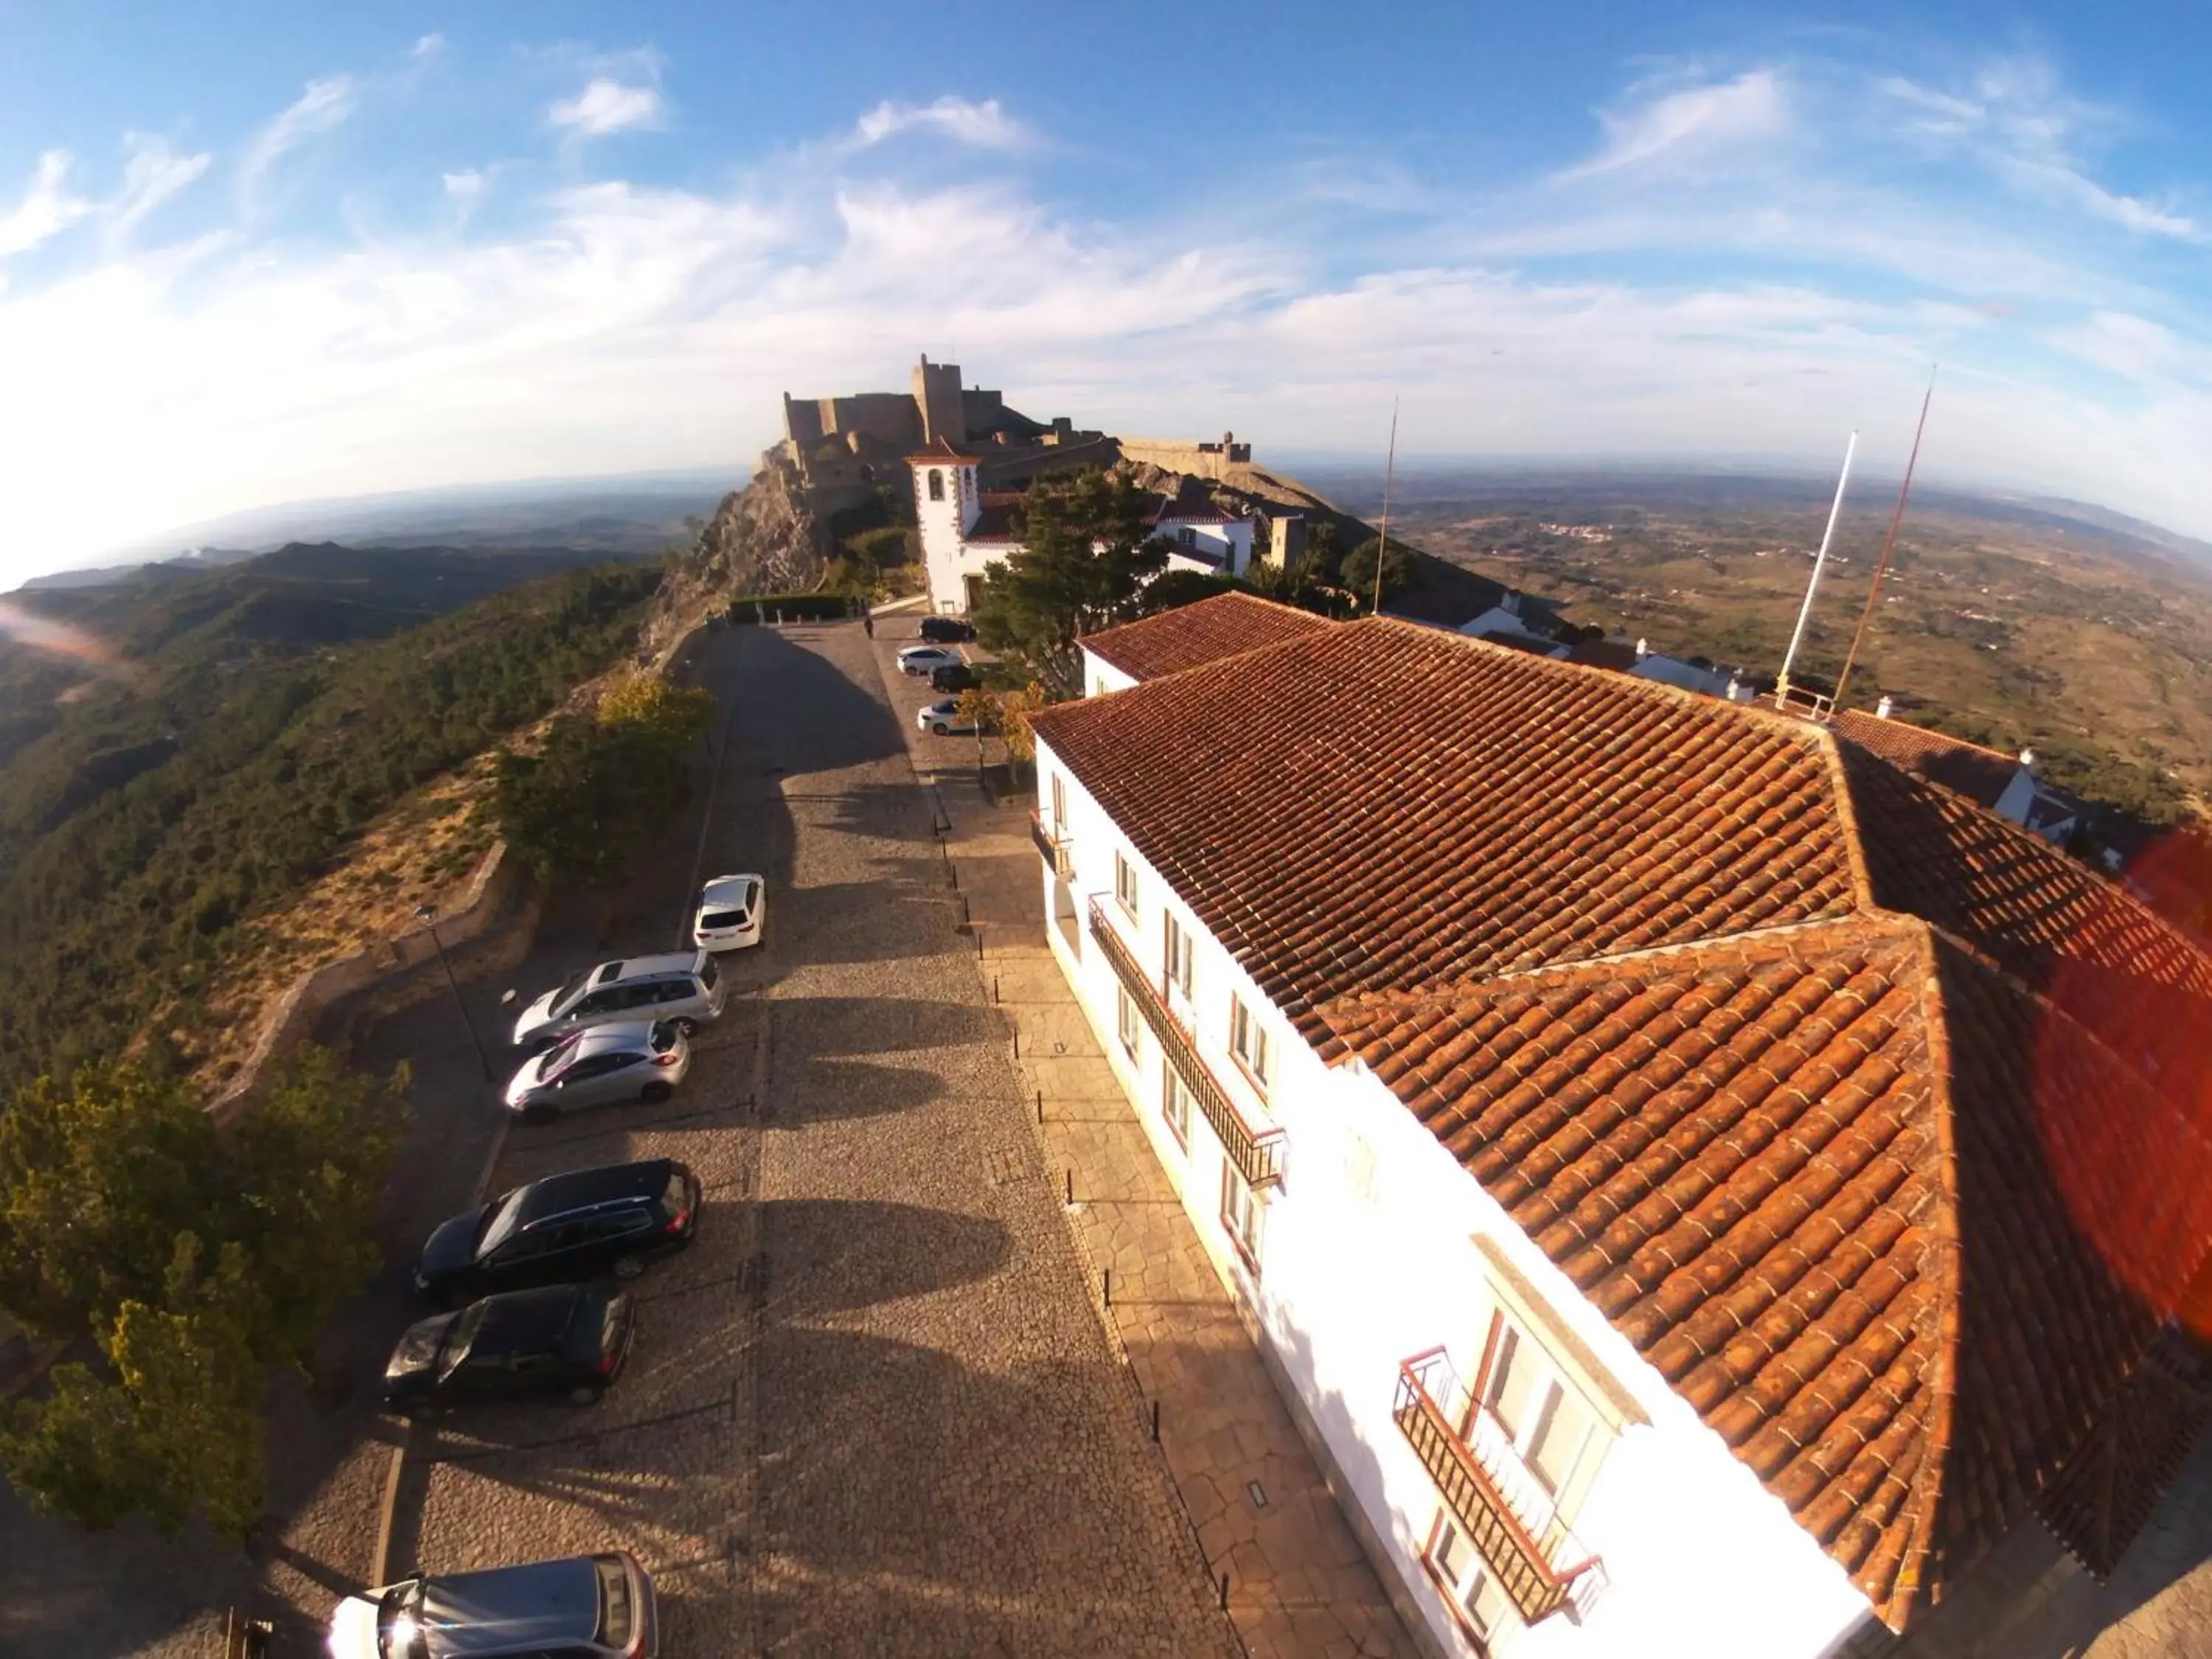 Off site, Bird's-eye View in Dom Dinis Marvão